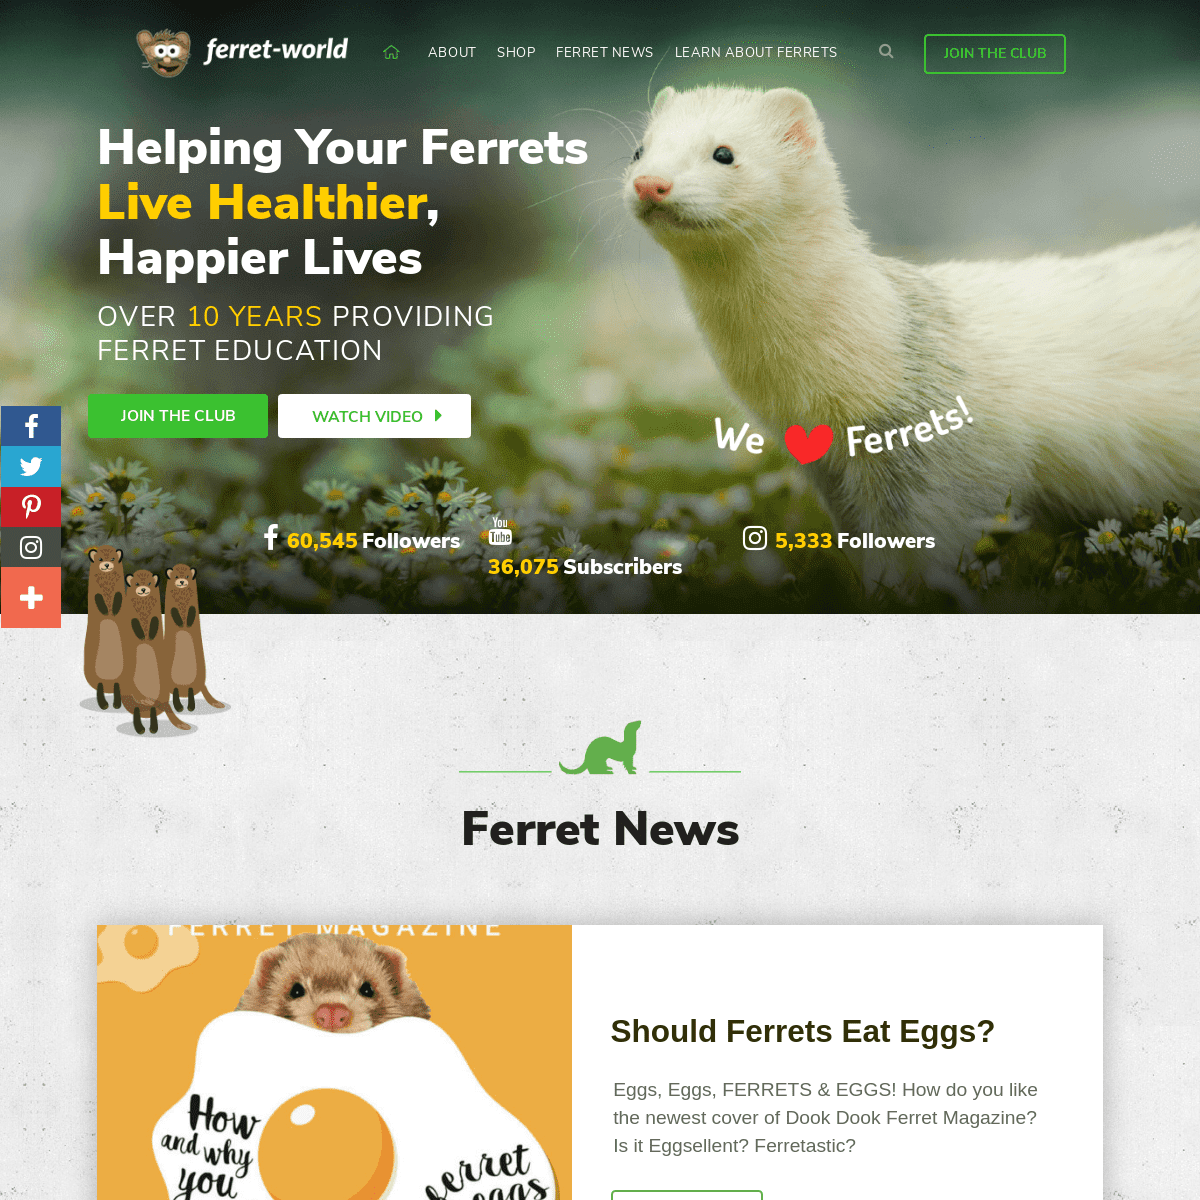 A complete backup of ferret-world.com